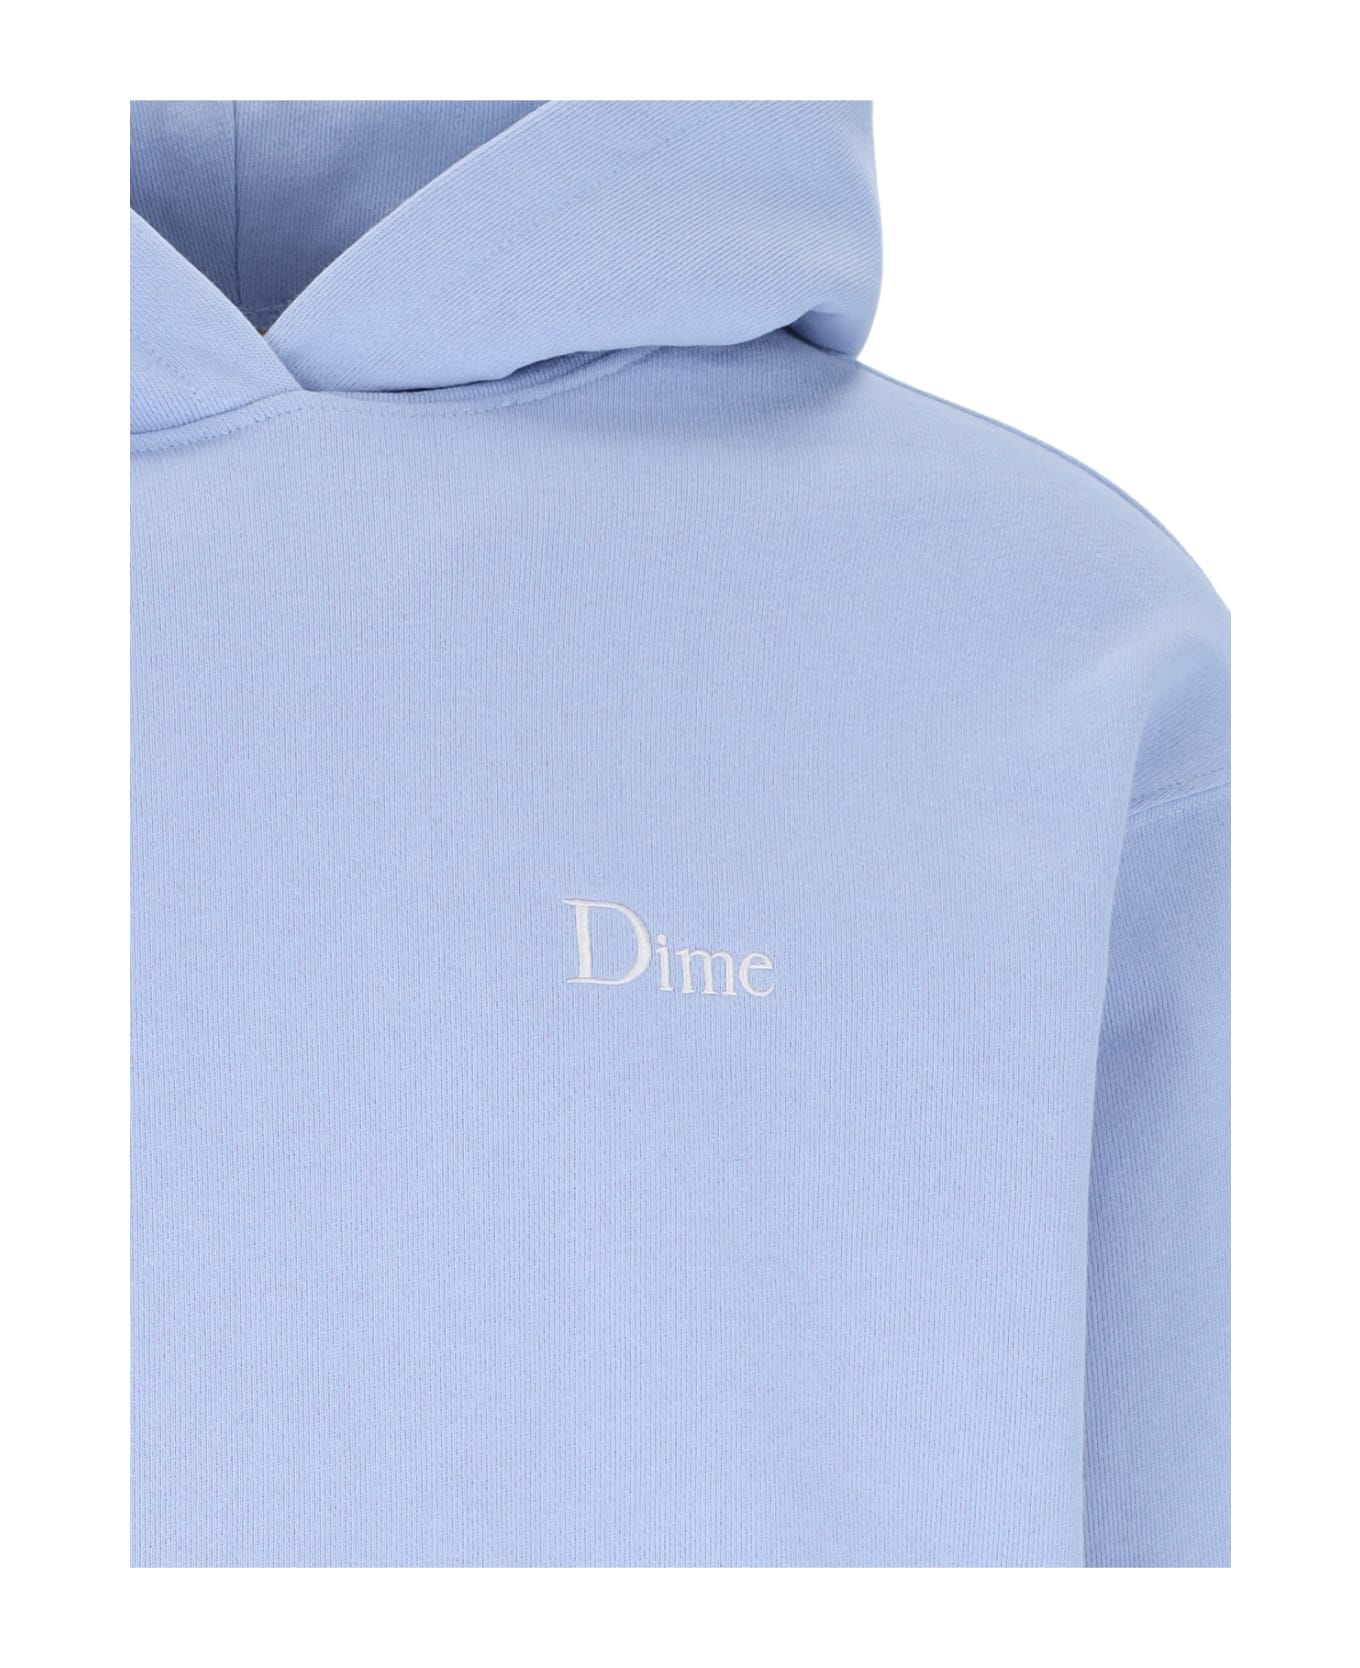 Dime Logo Sweatshirt - Light Blue